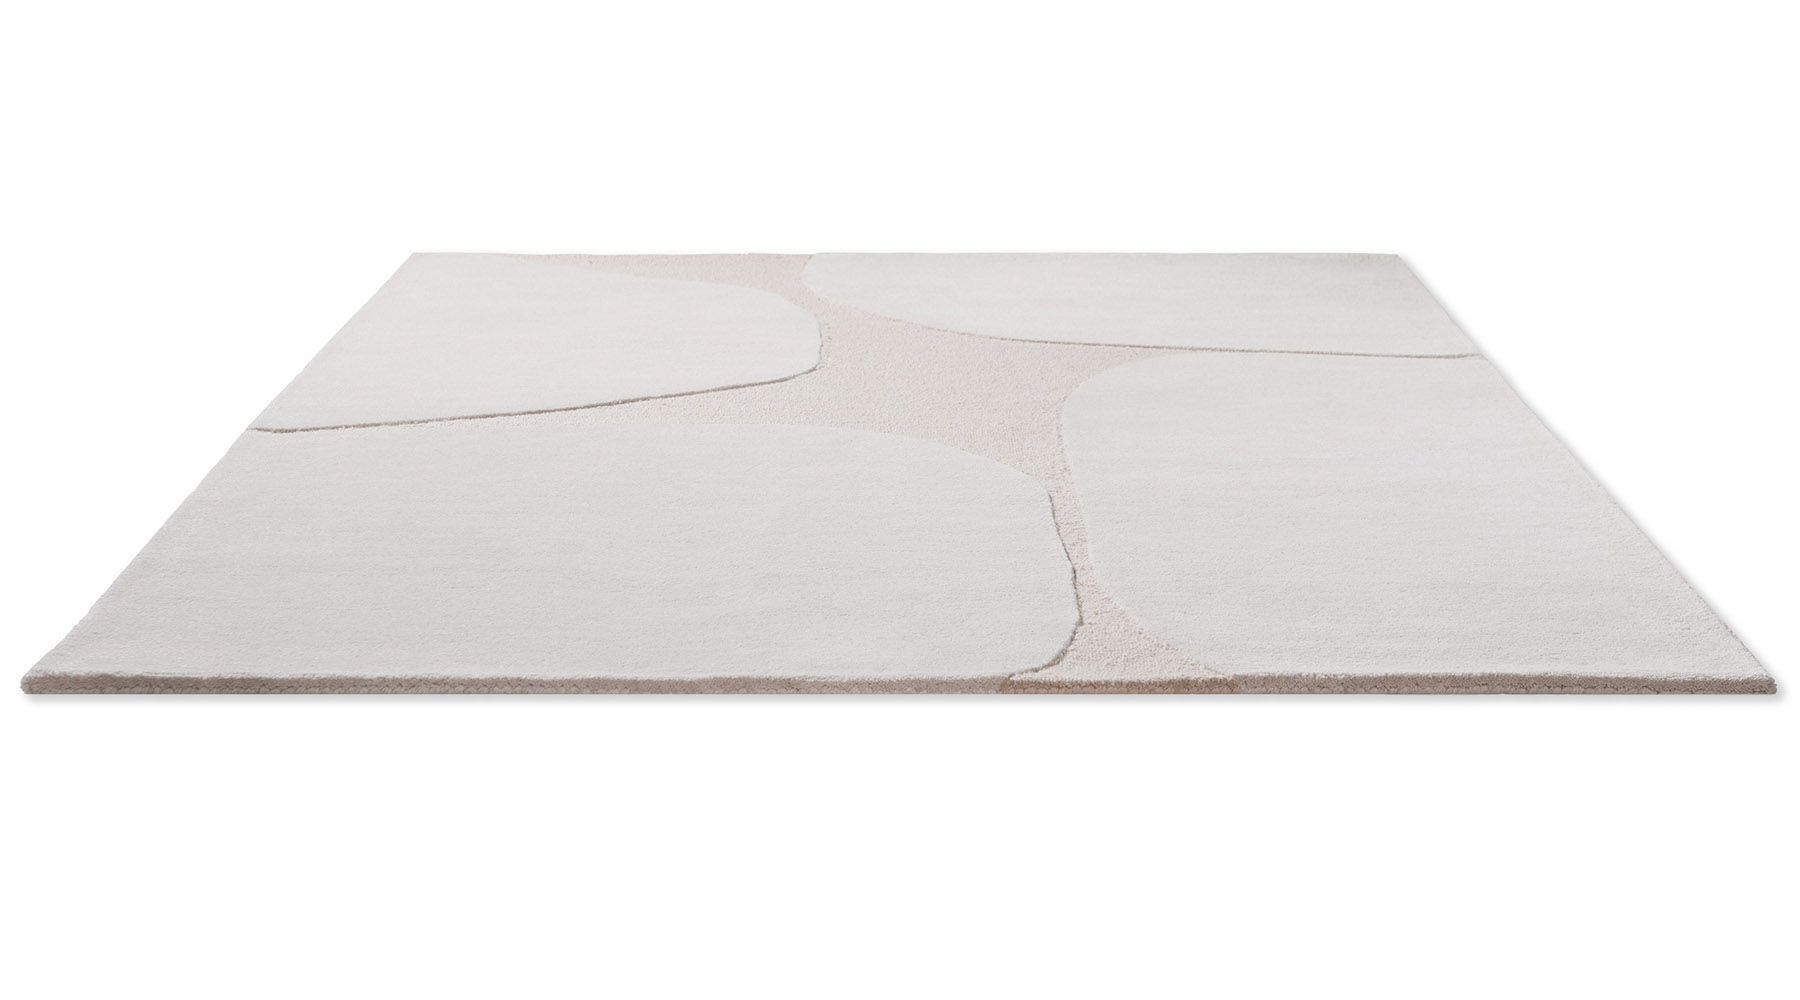 Decor Primi Double Cream Handwoven Rug ☞ Size: 5' 3" x 7' 7" (160 x 230 cm)